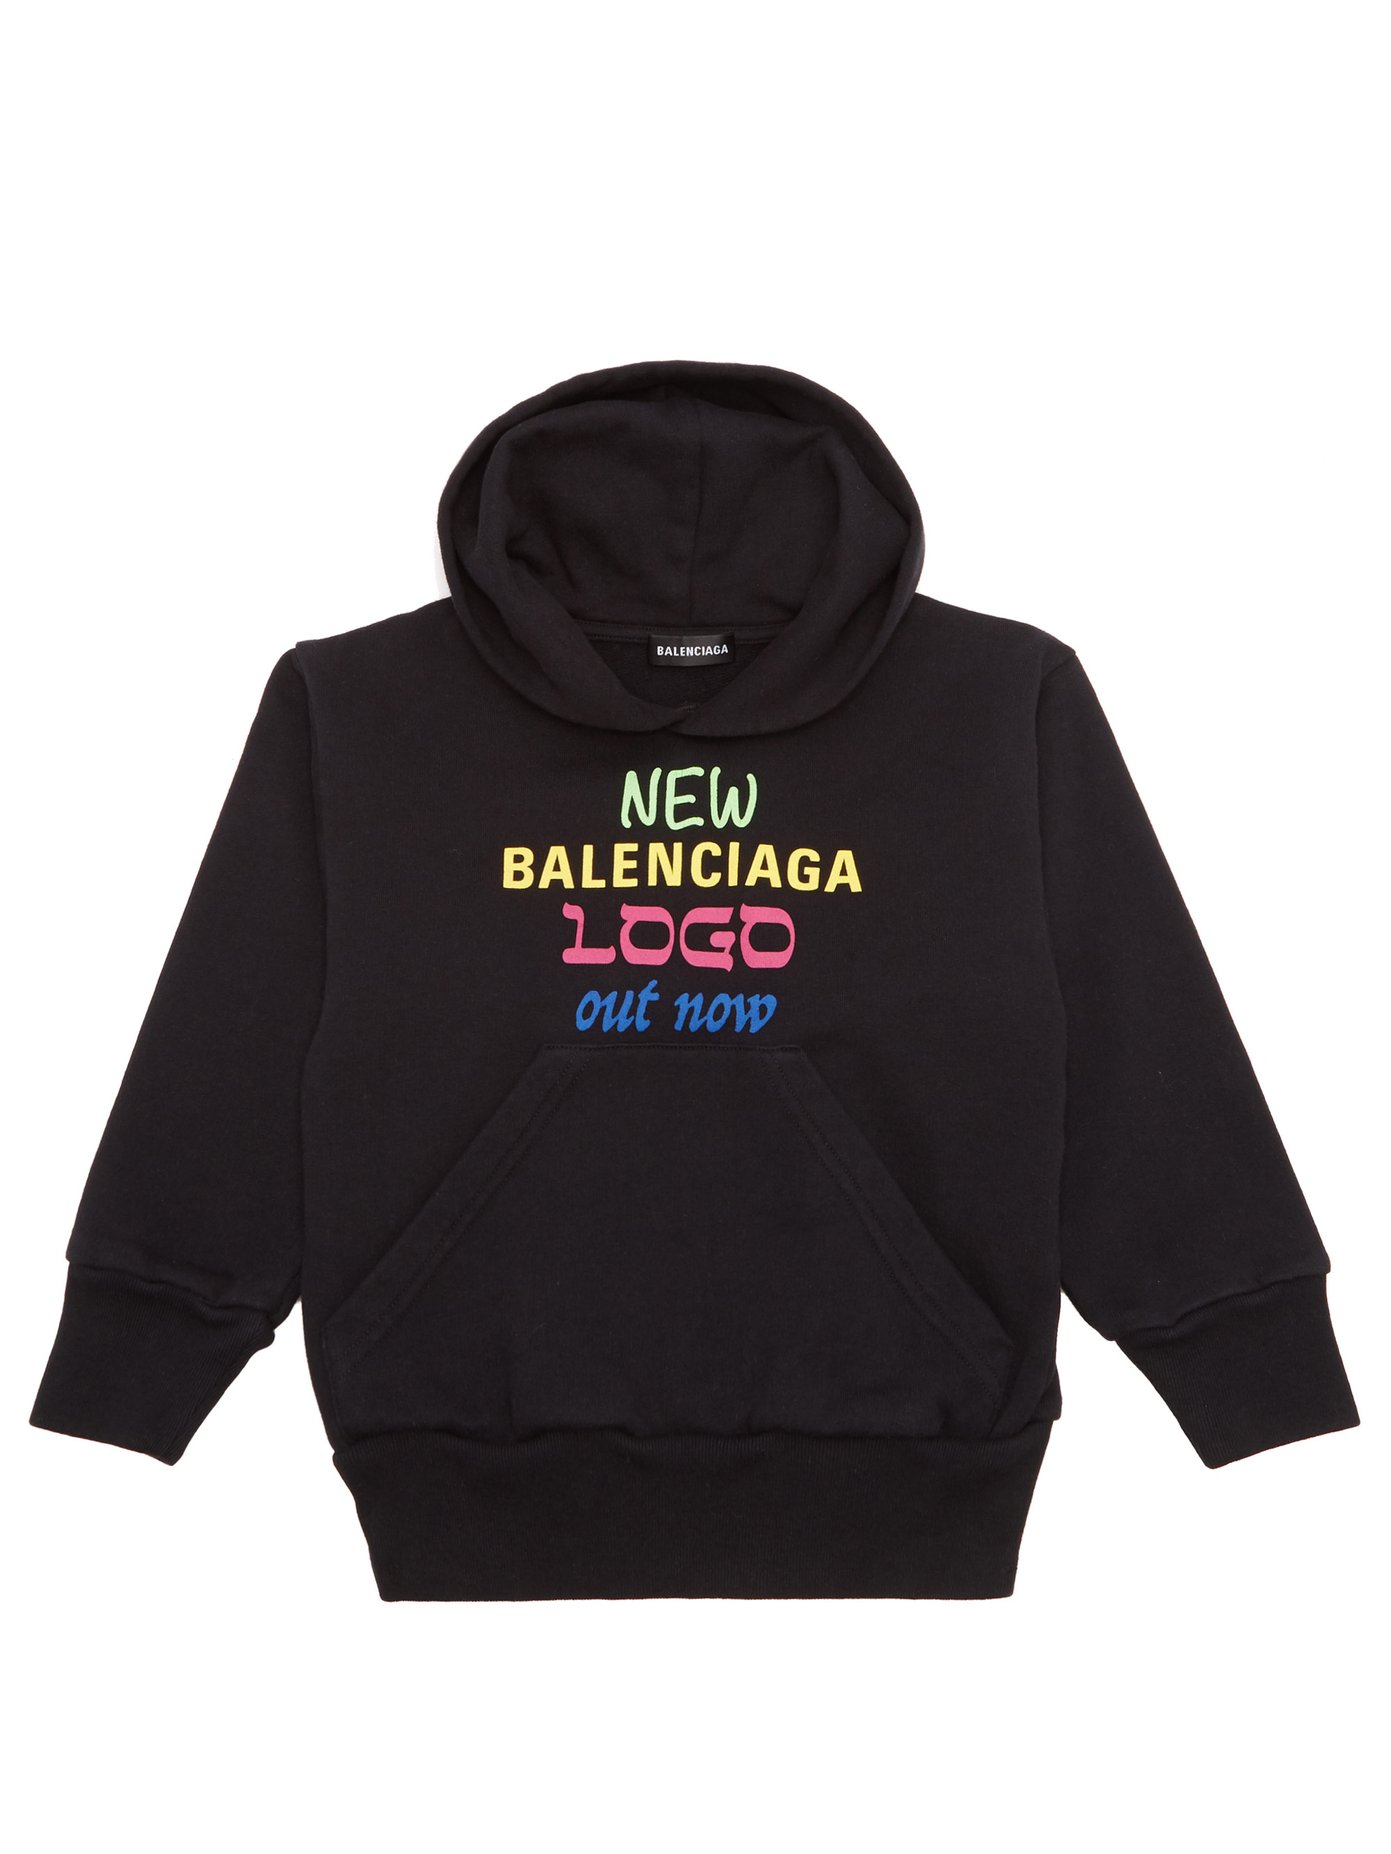 new balenciaga logo out now hoodie